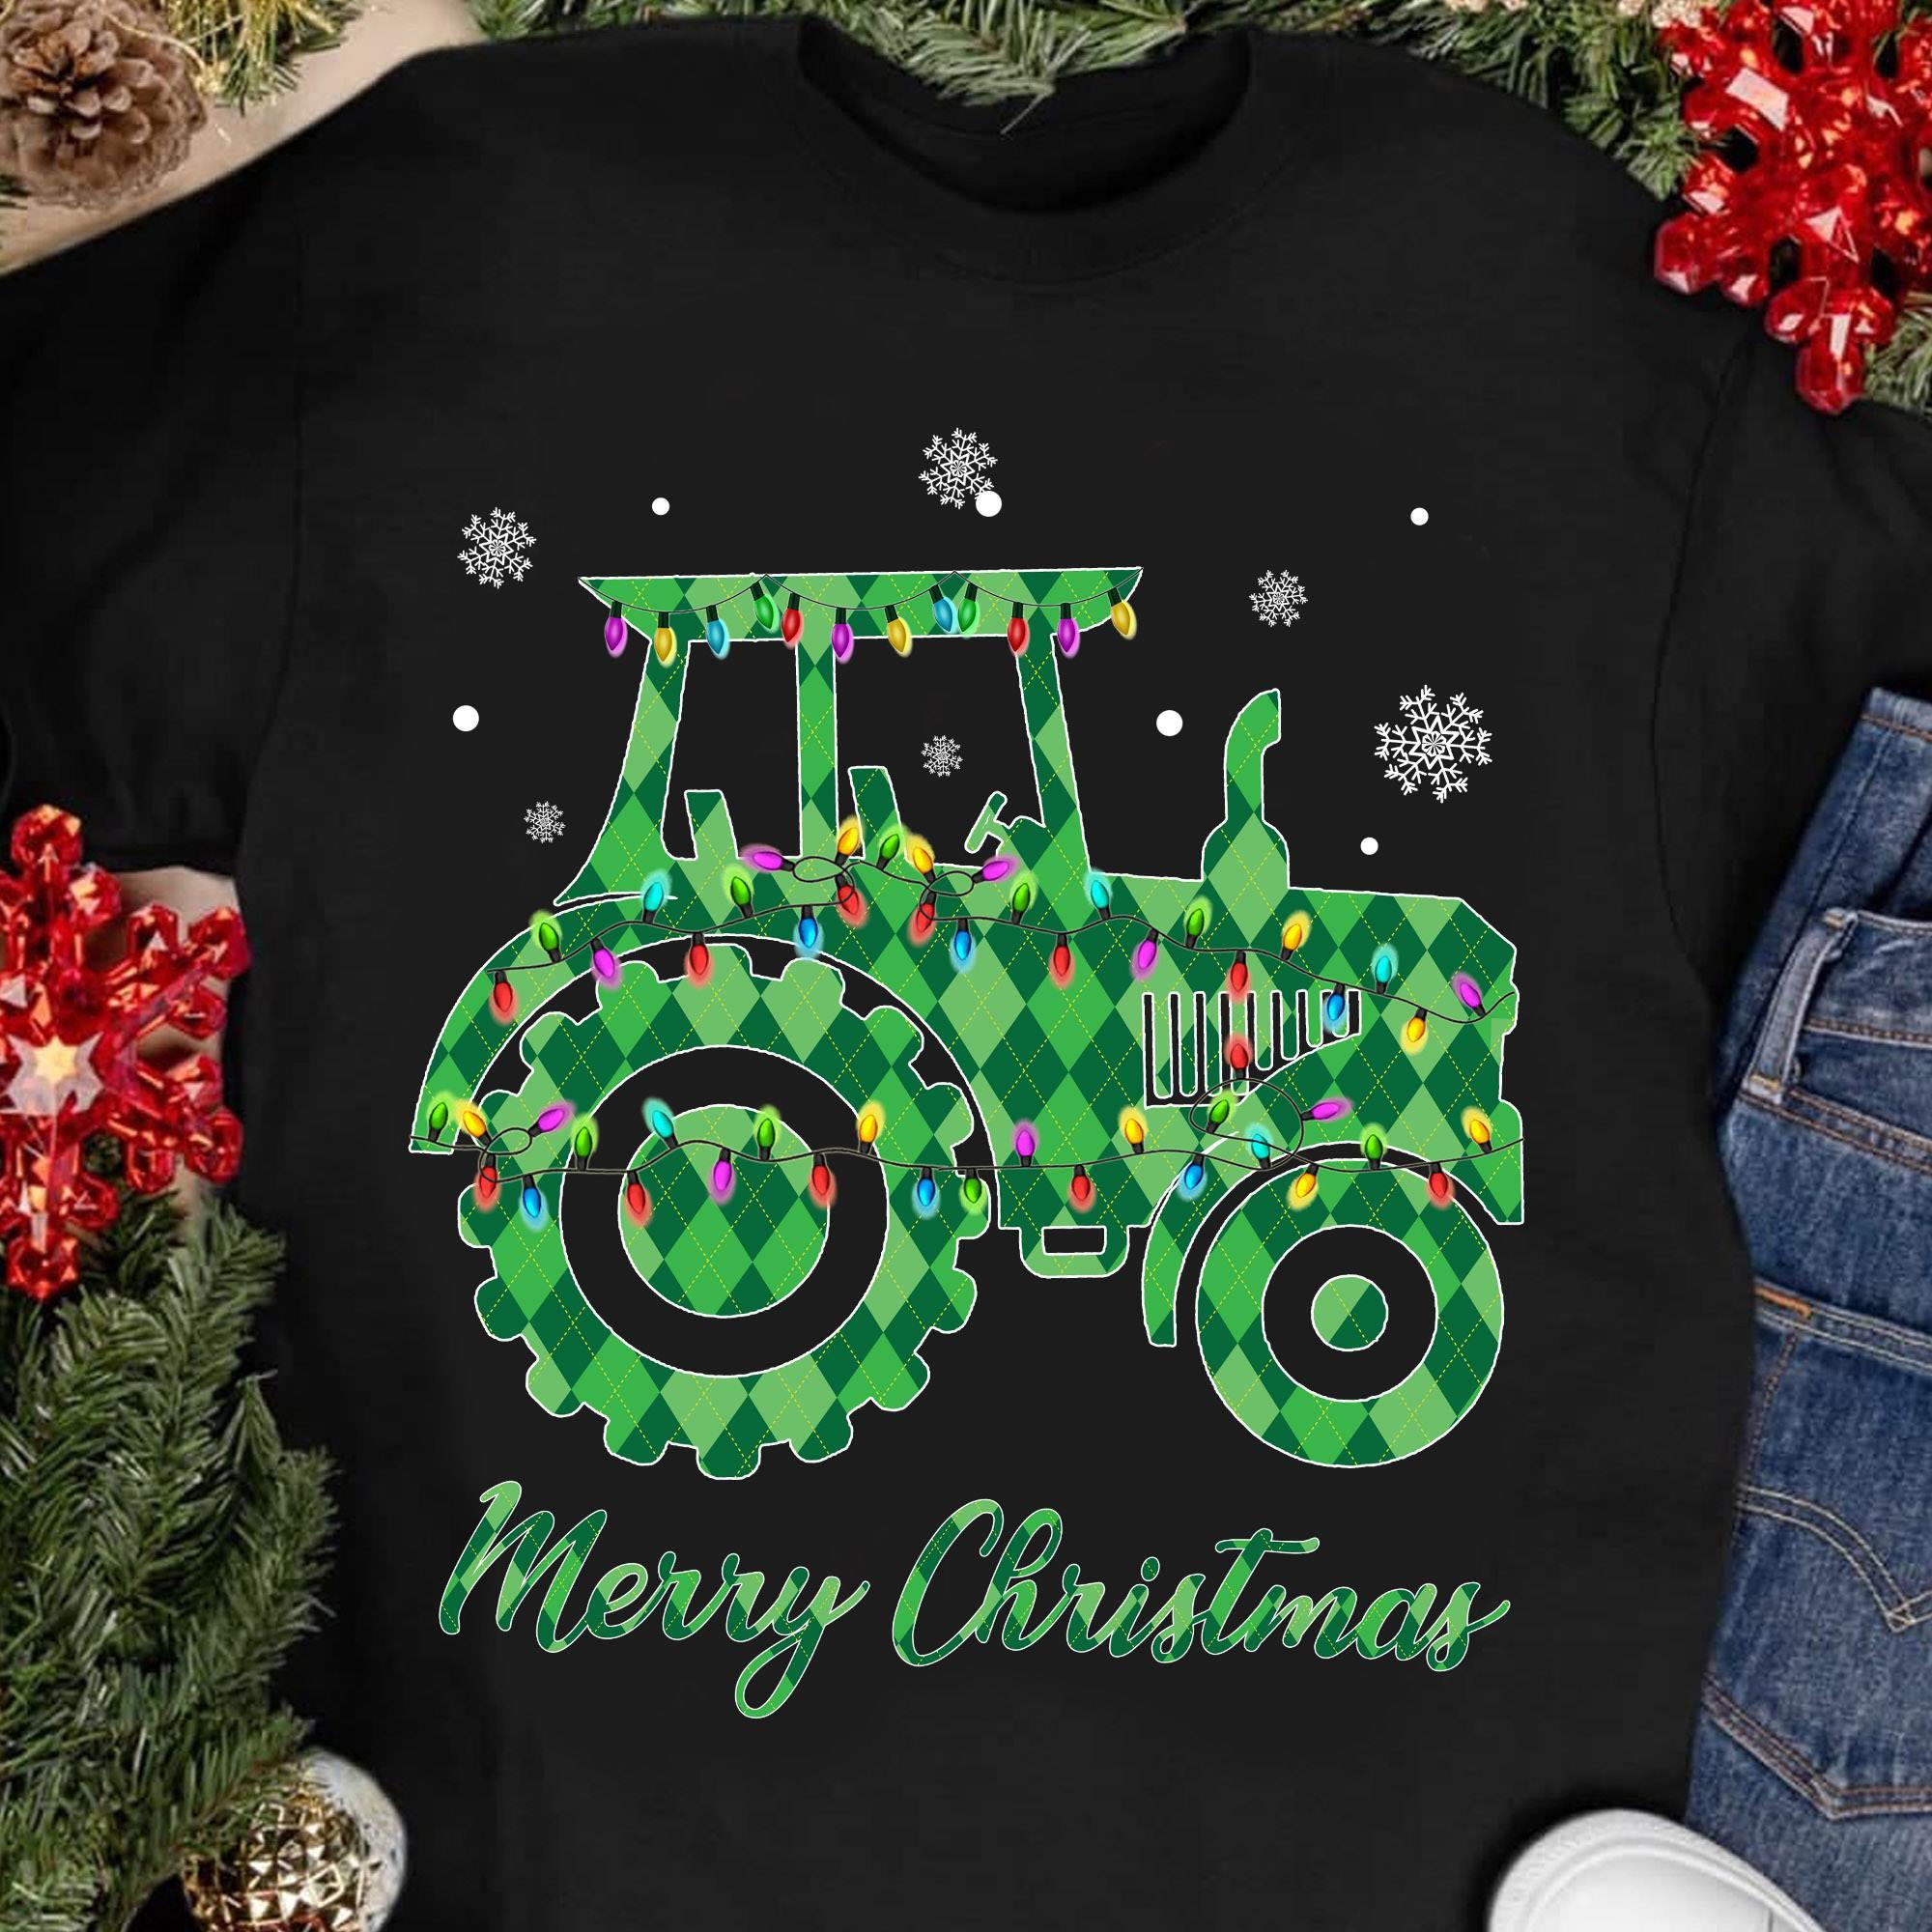 Mery Christmas - Tractor Christmas decoration, Christmas ugly sweater